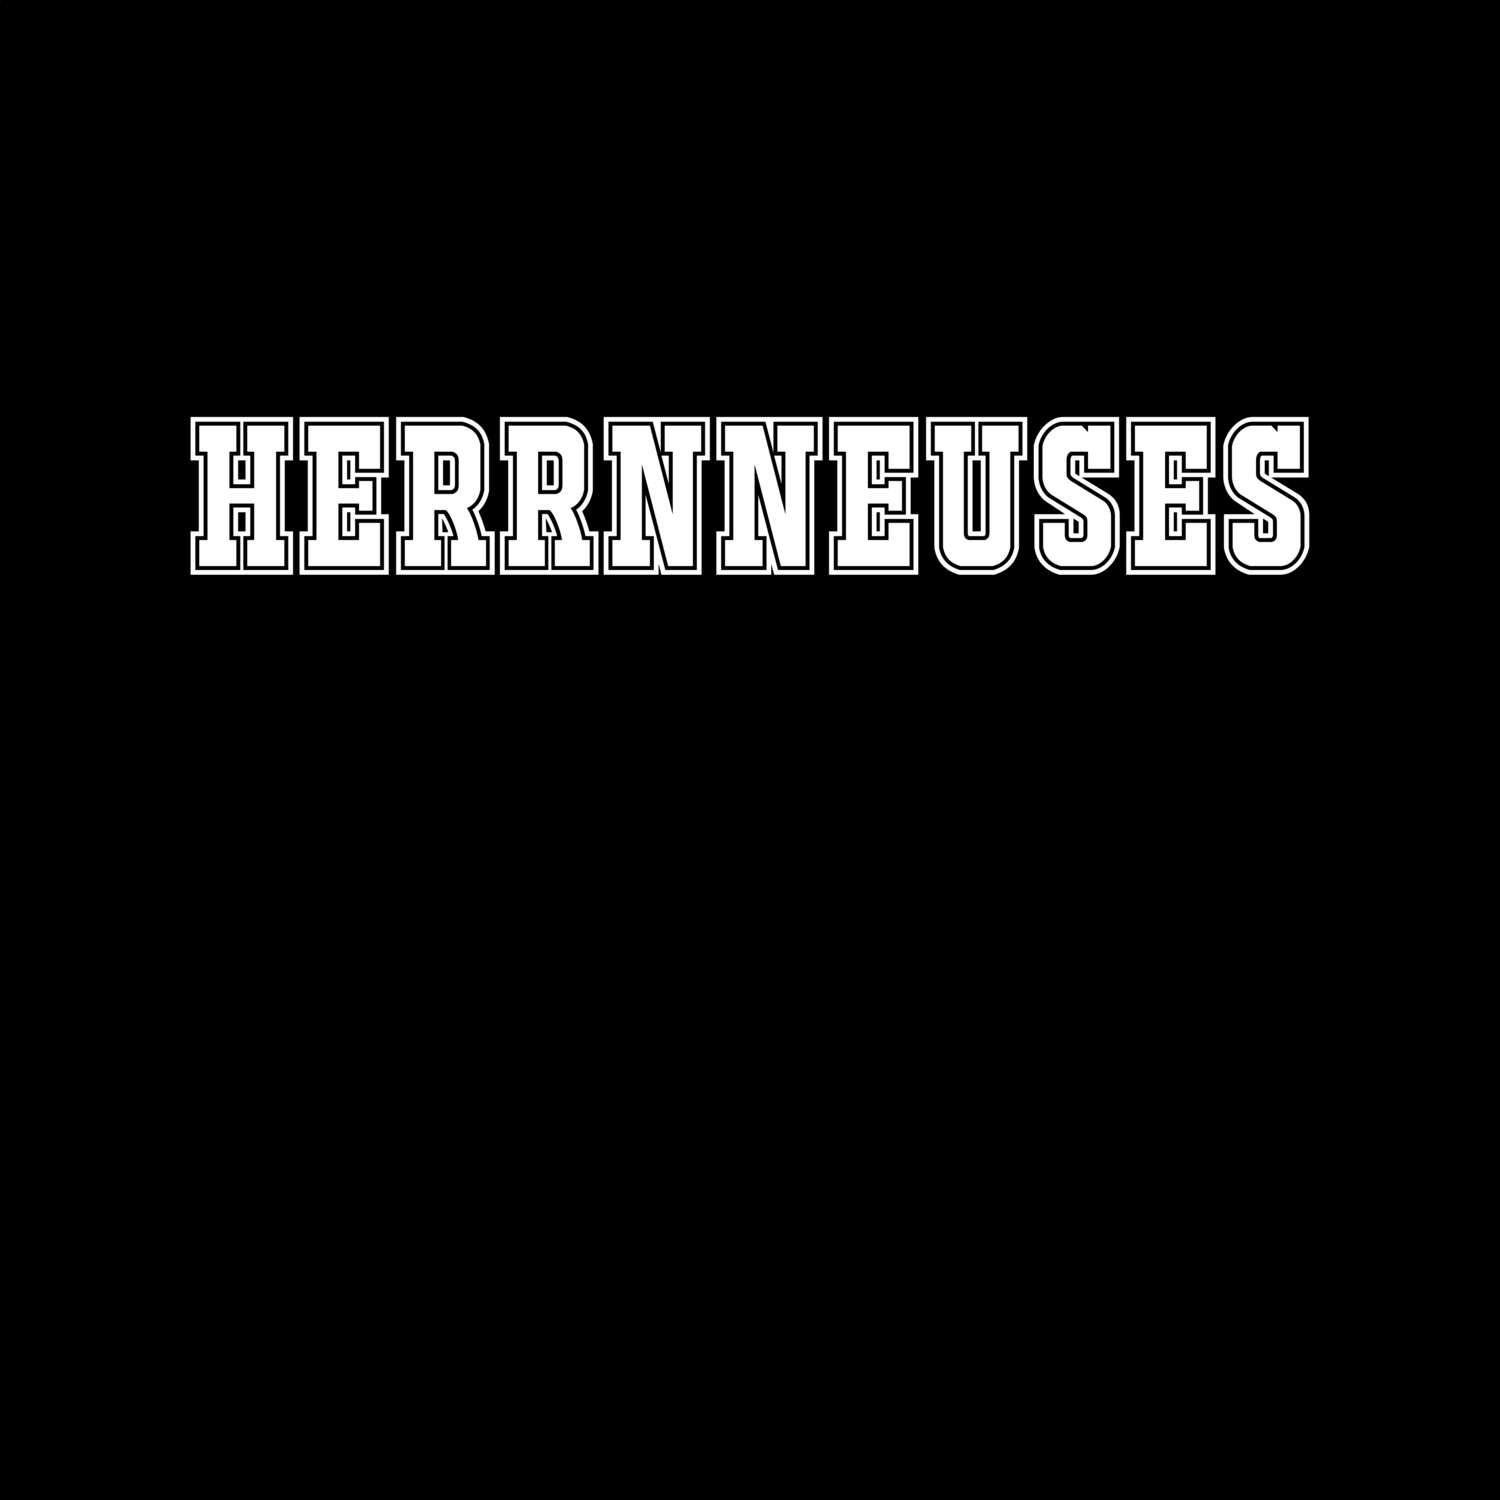 Herrnneuses T-Shirt »Classic«